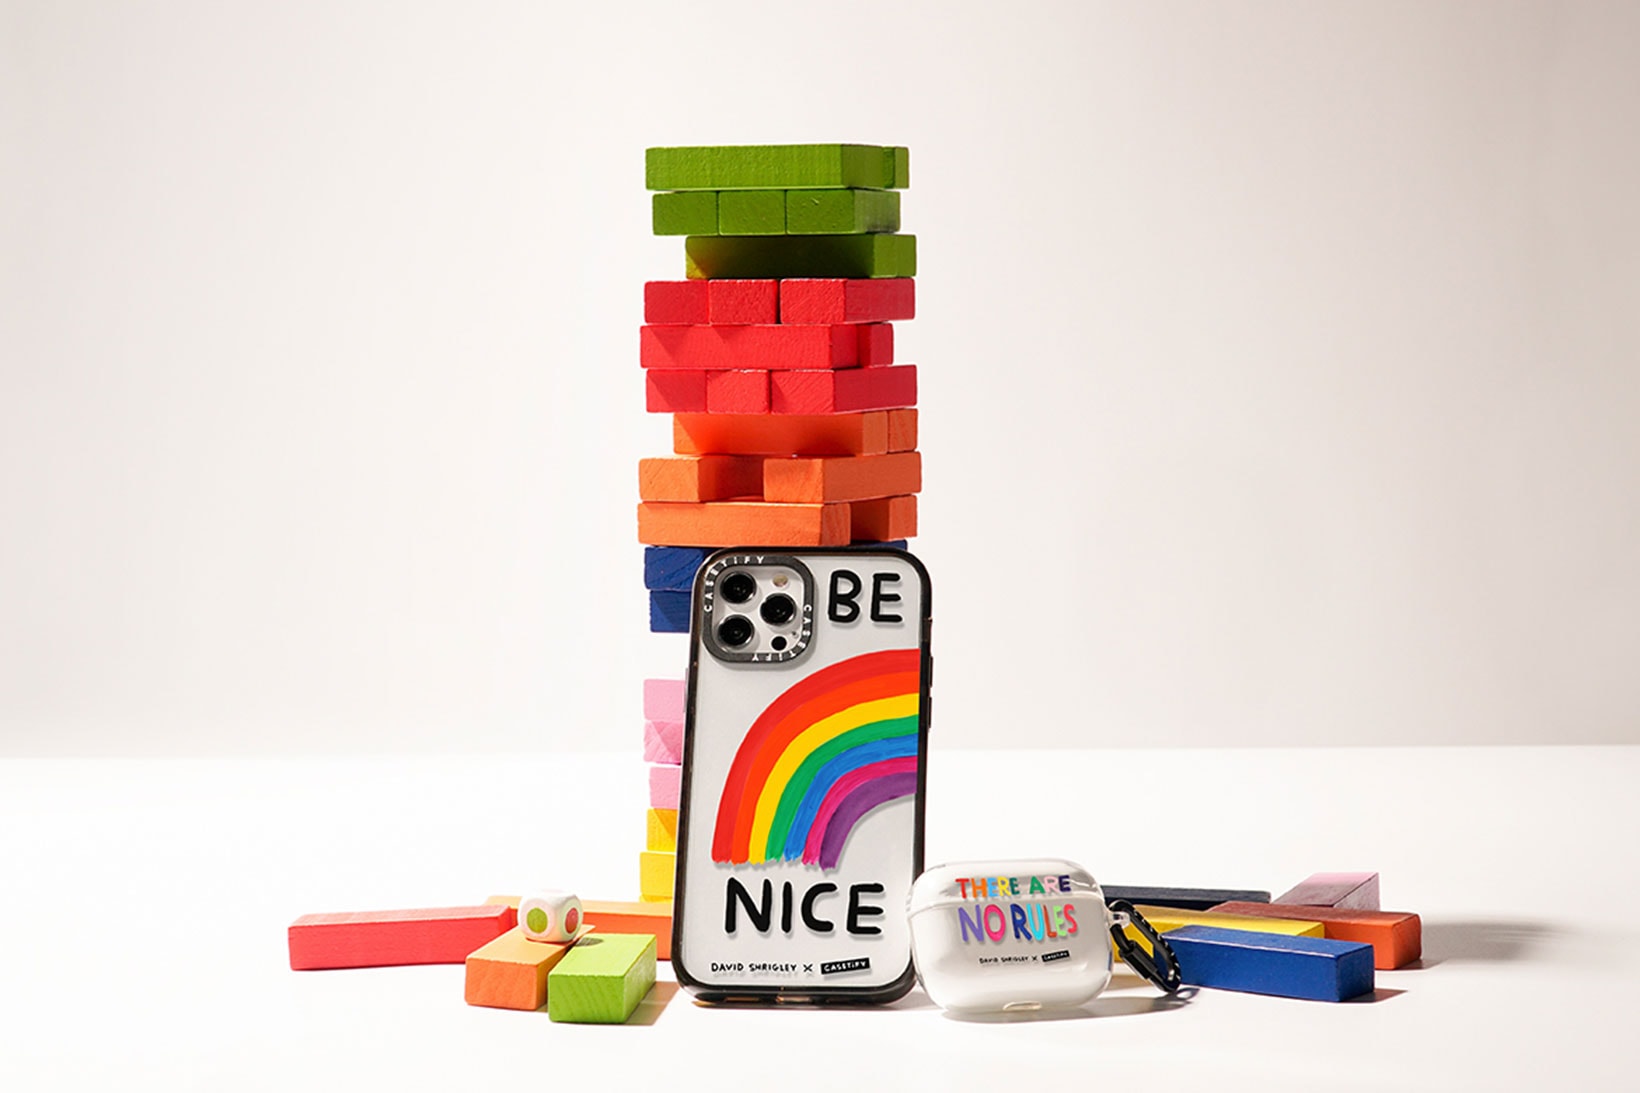 david shrigley casetify collaboration tech accessories rainbow nice phone case